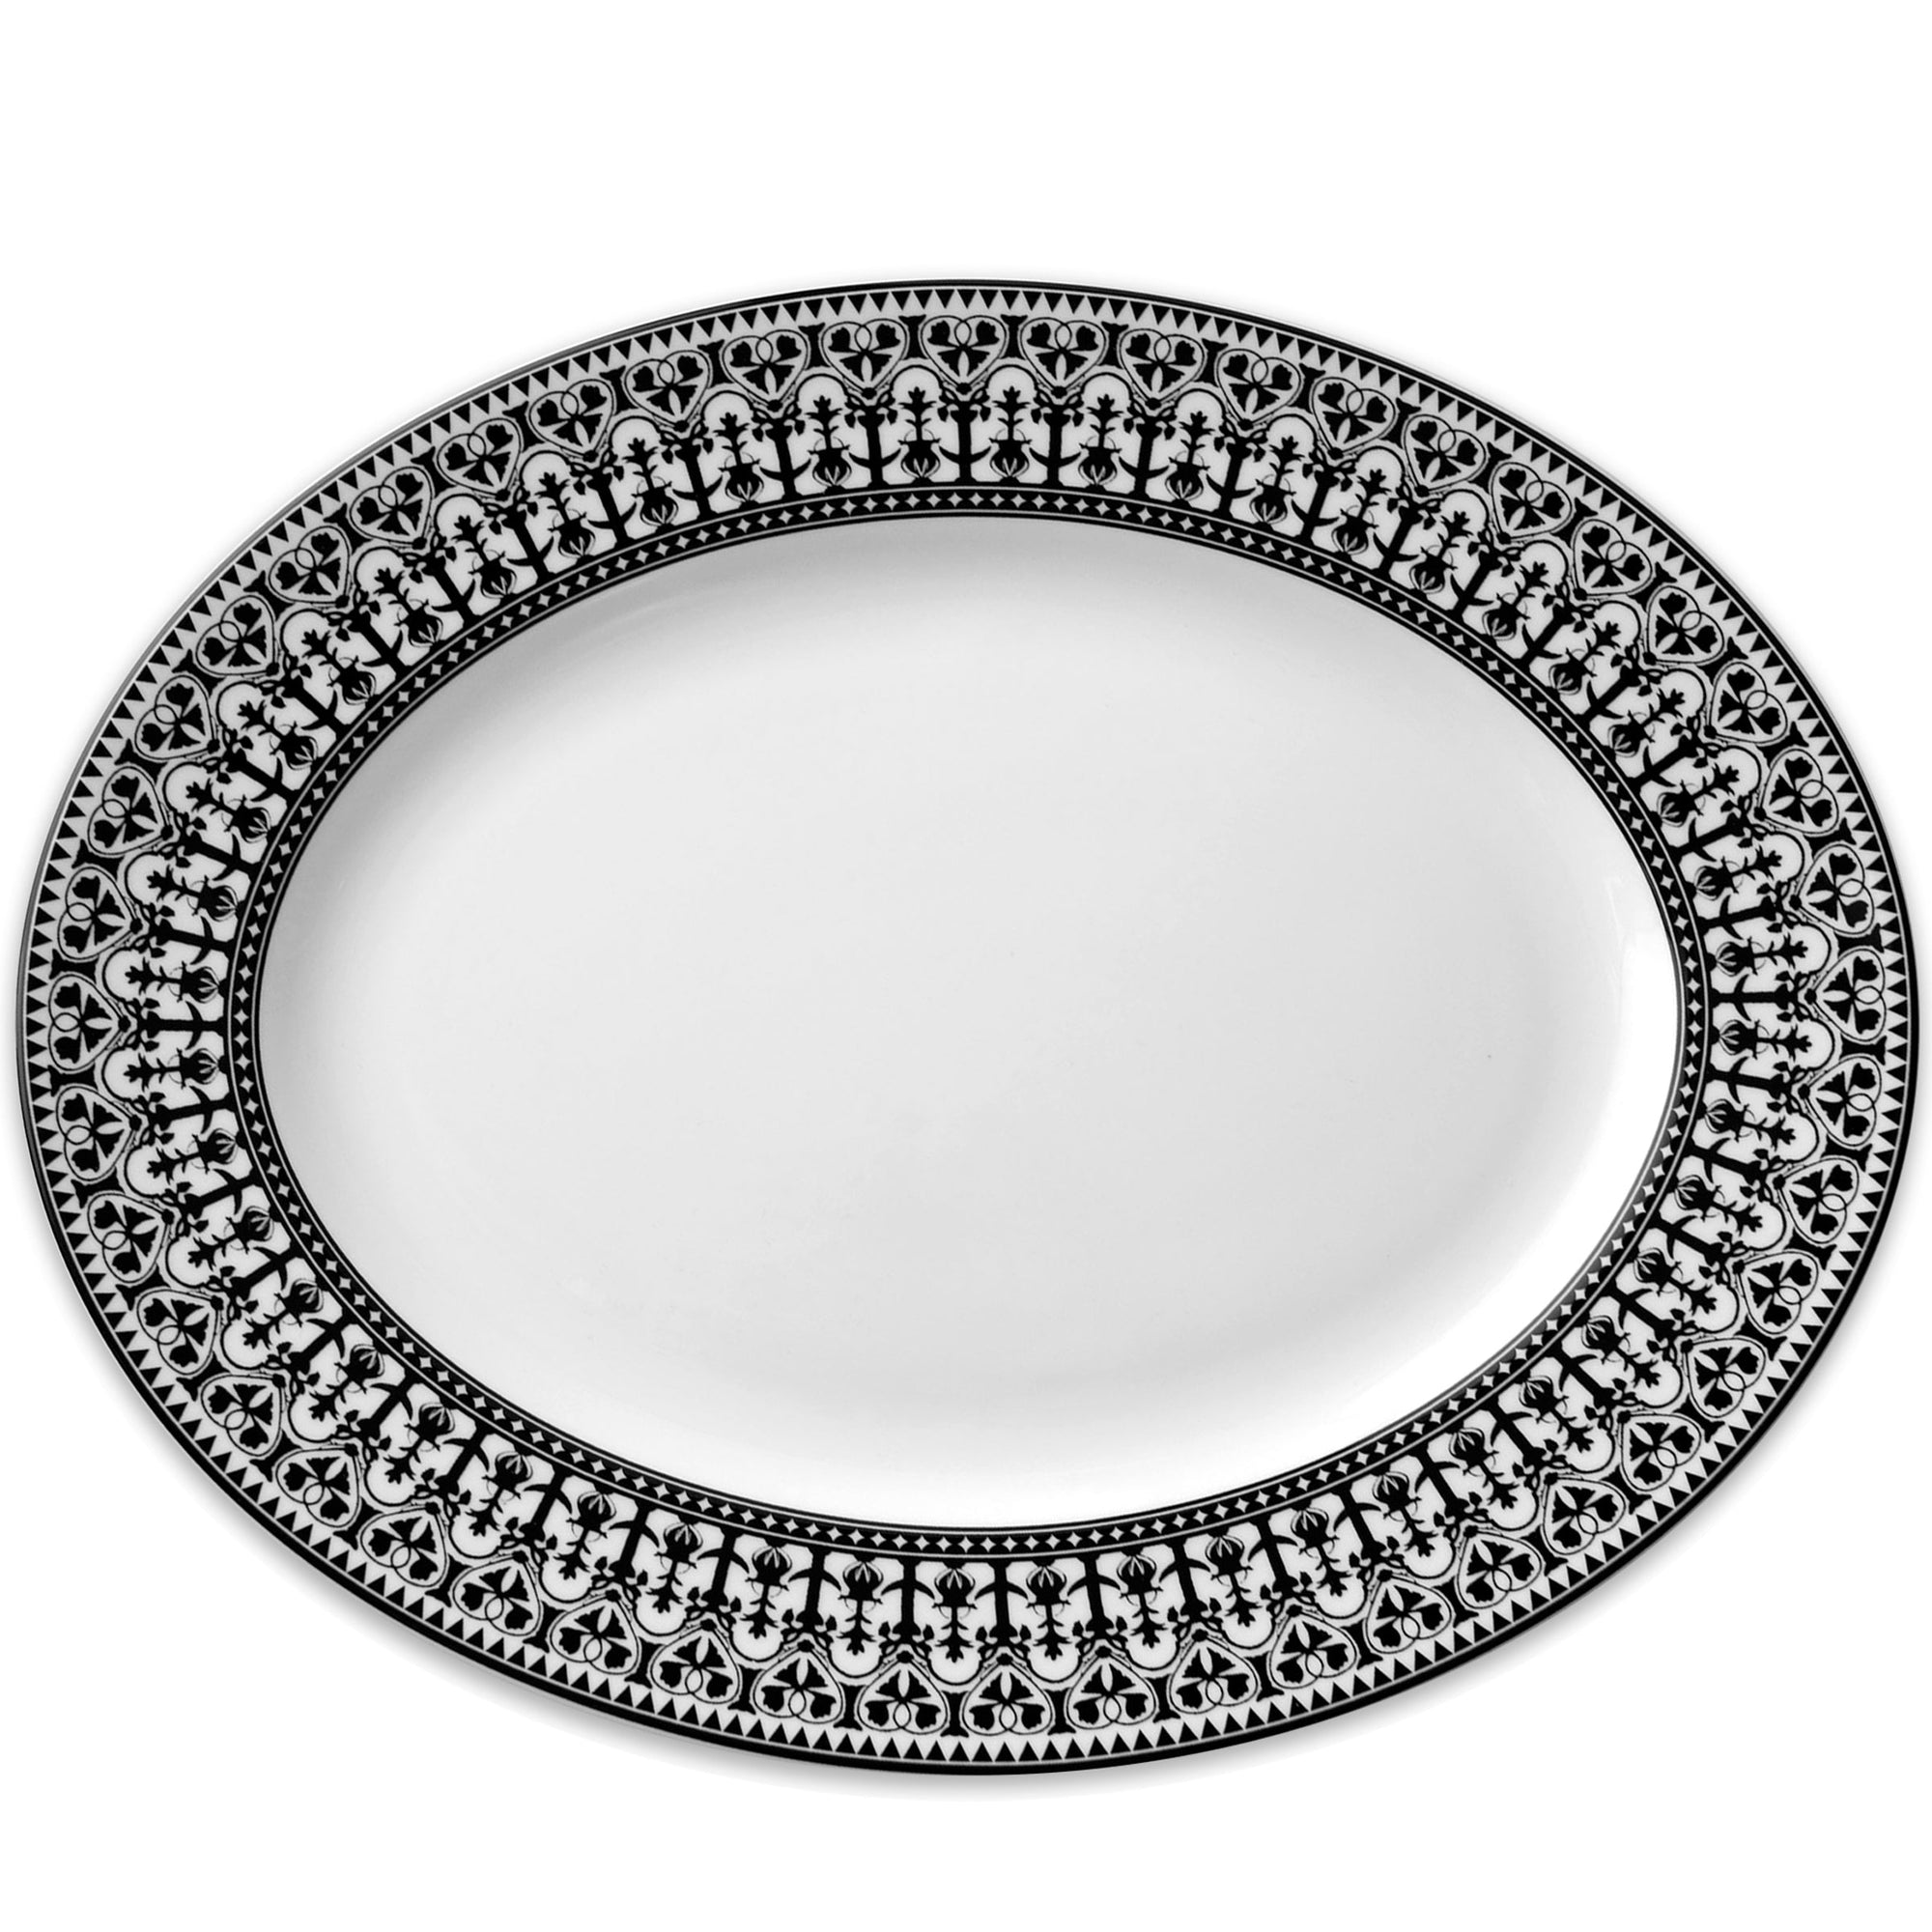 Casablanca large oval black and white serving platter by Caskata.